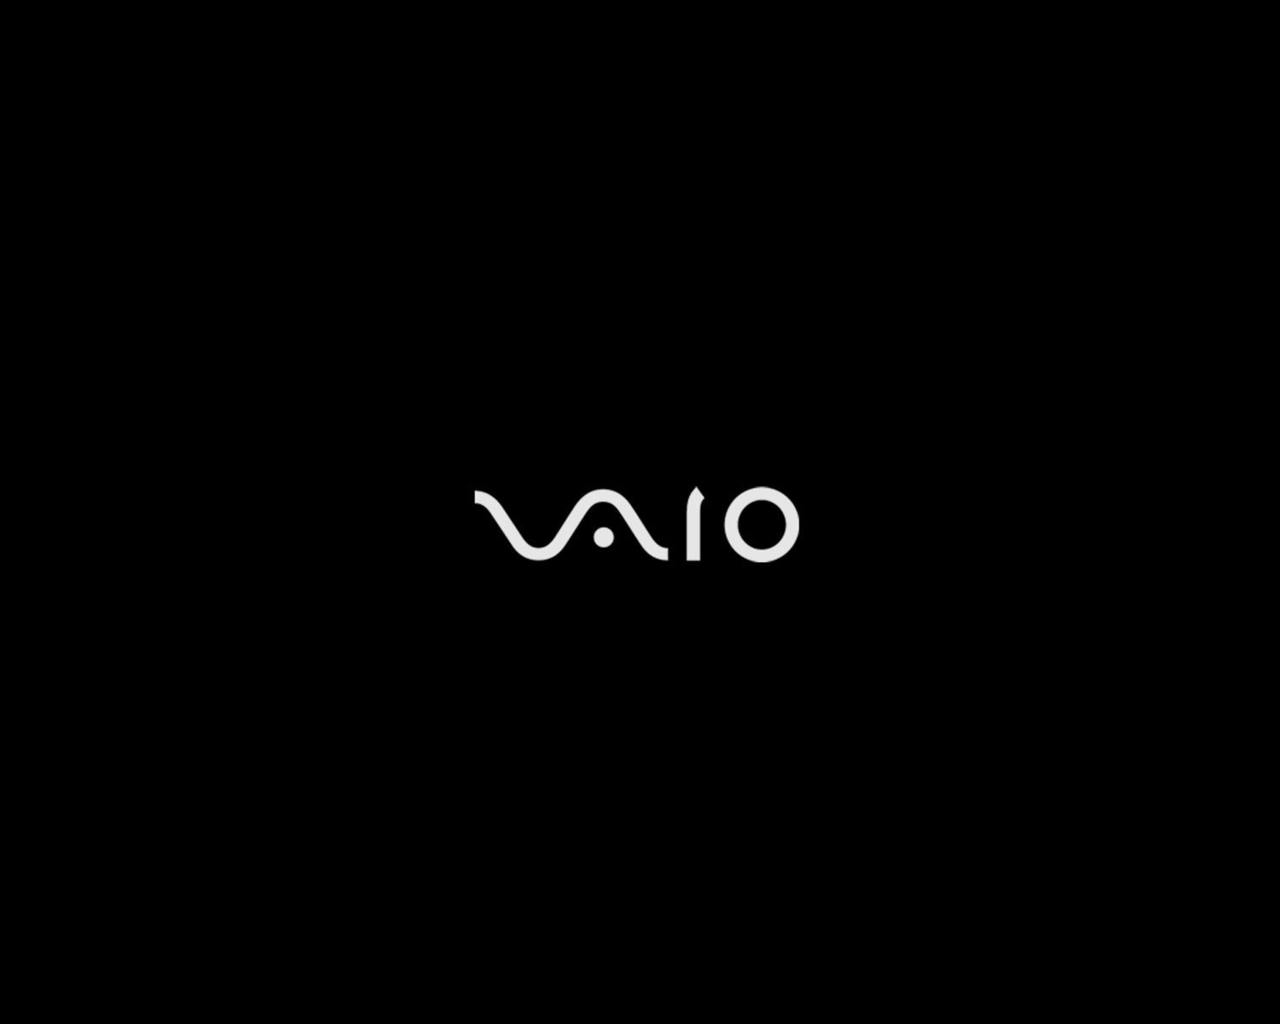 Vaio Black for 1280 x 1024 resolution